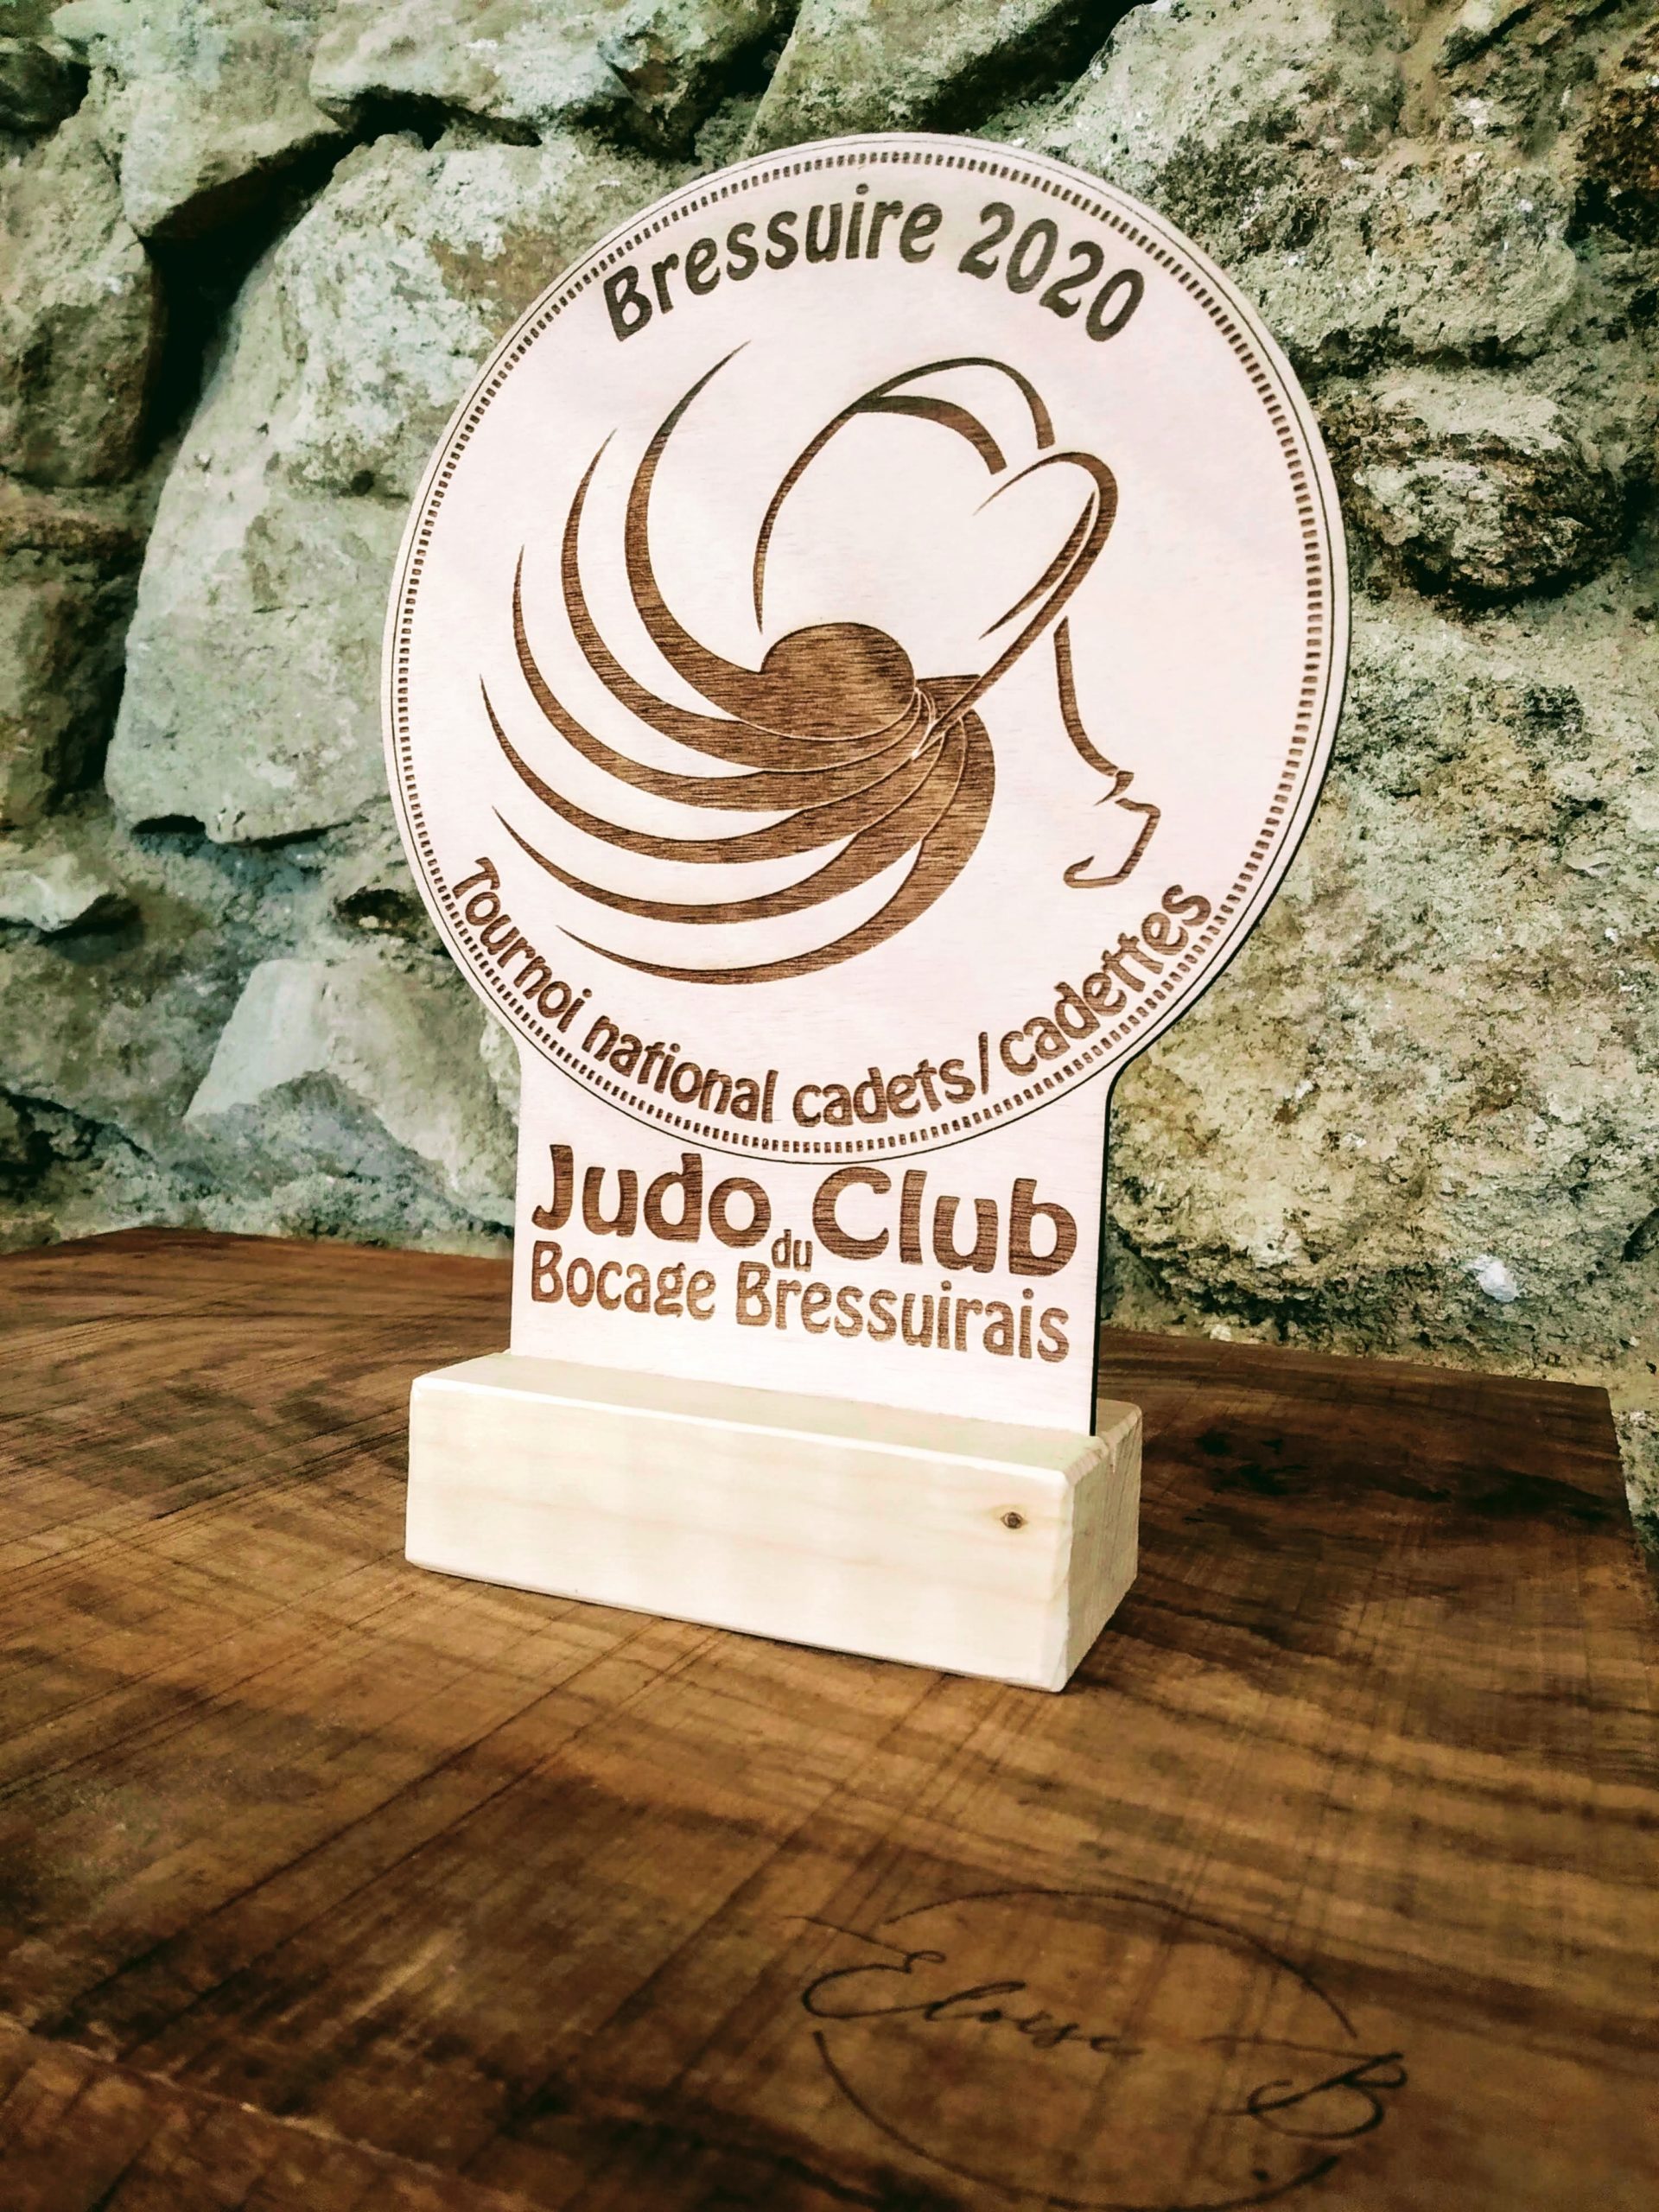 Trophée judo club bressuirais